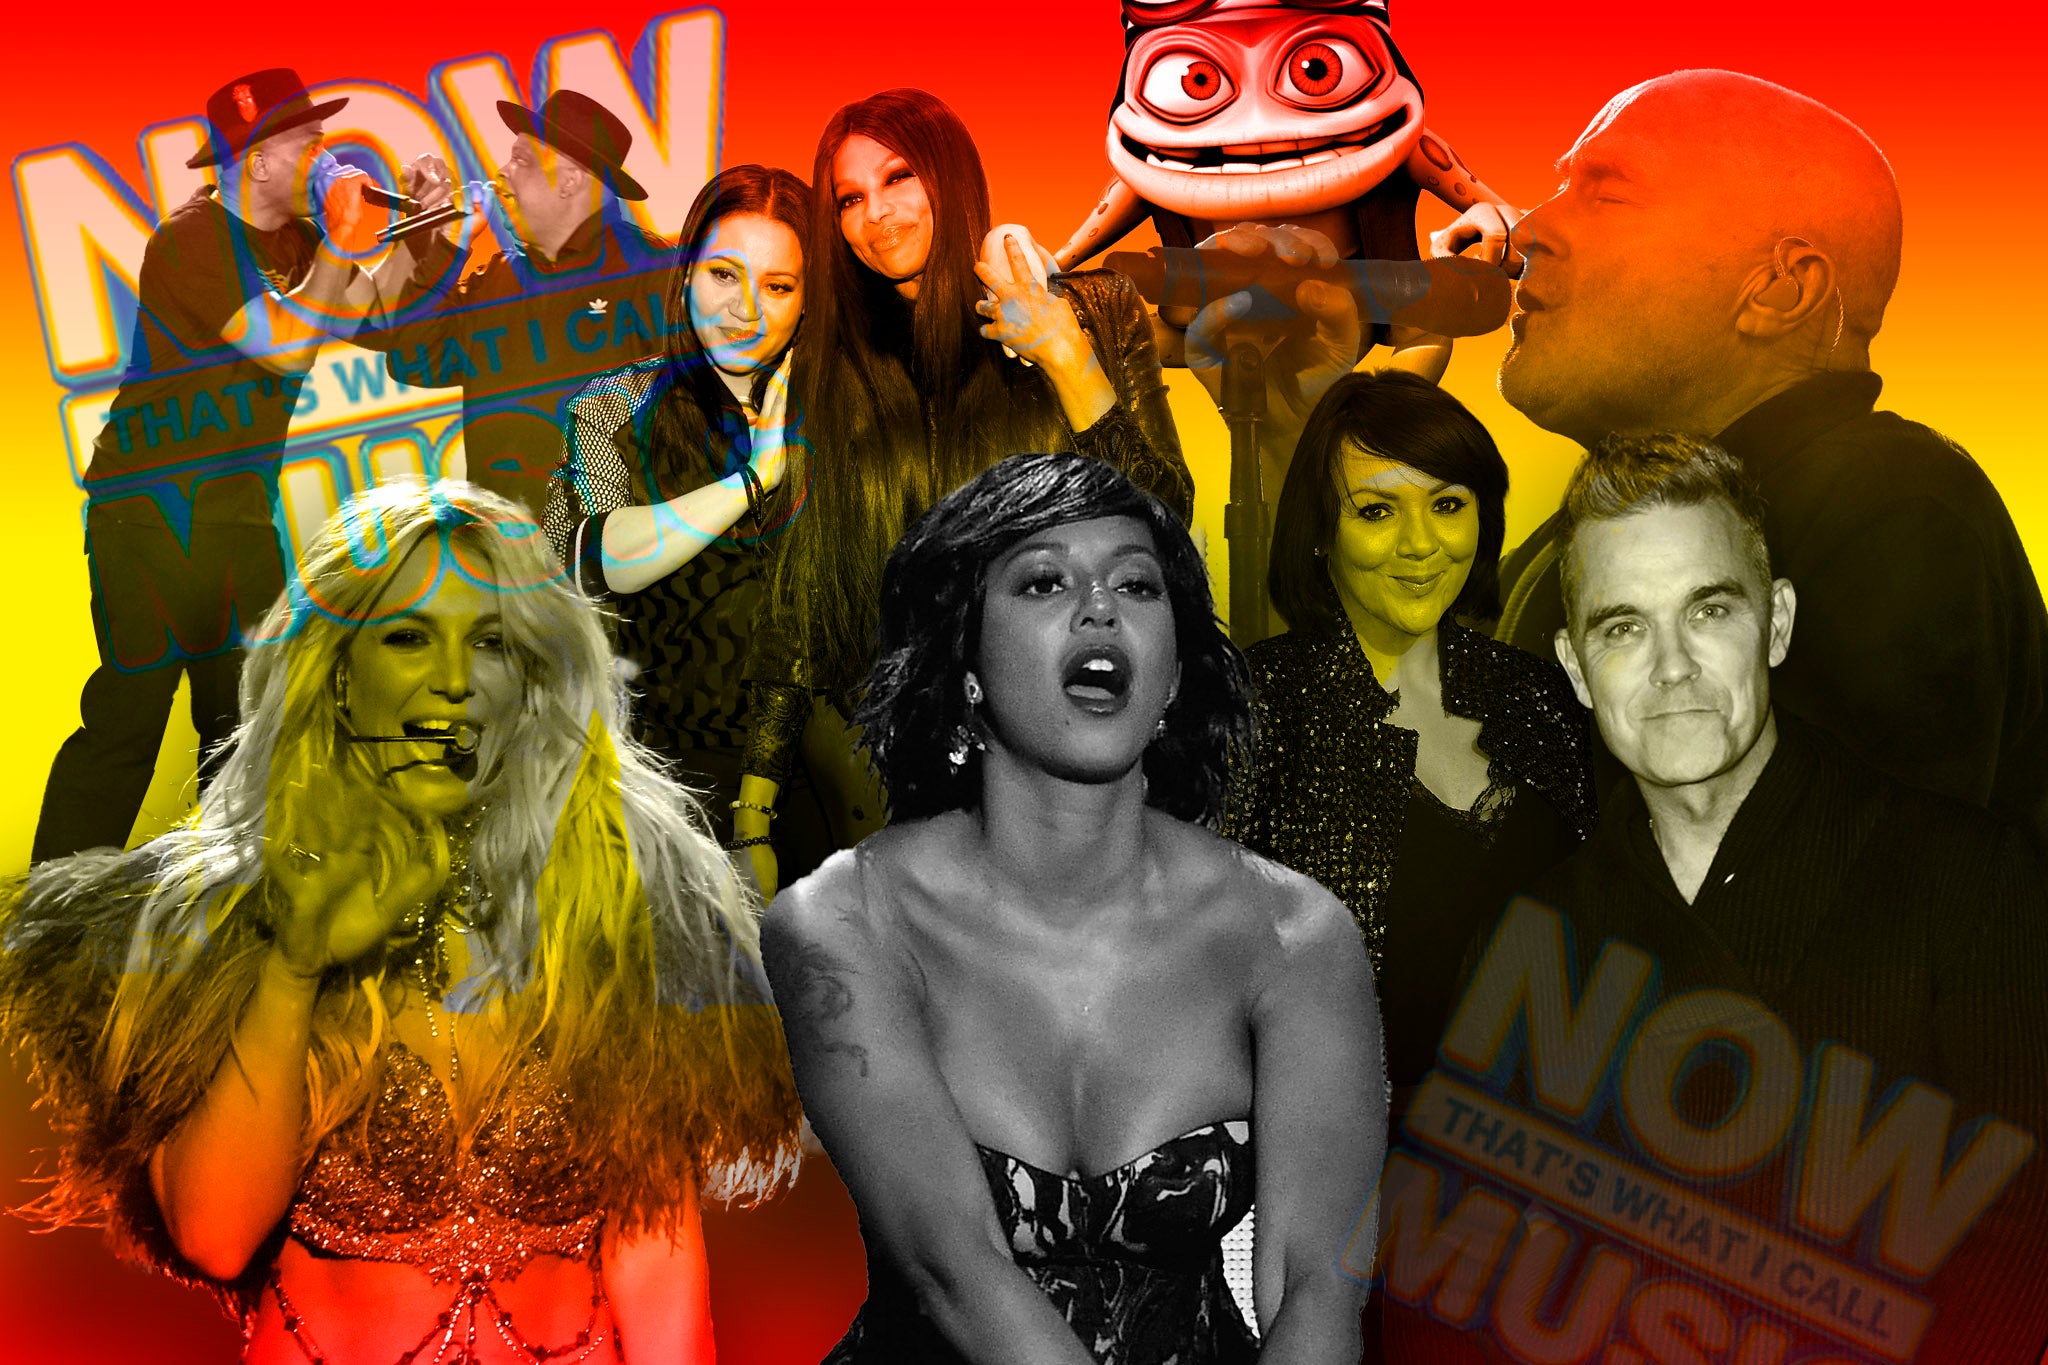 Britney Spears, Martine McCutcheon, Salt ‘N’ Pepa, Crazy Frog: ‘Now’ albums have it all